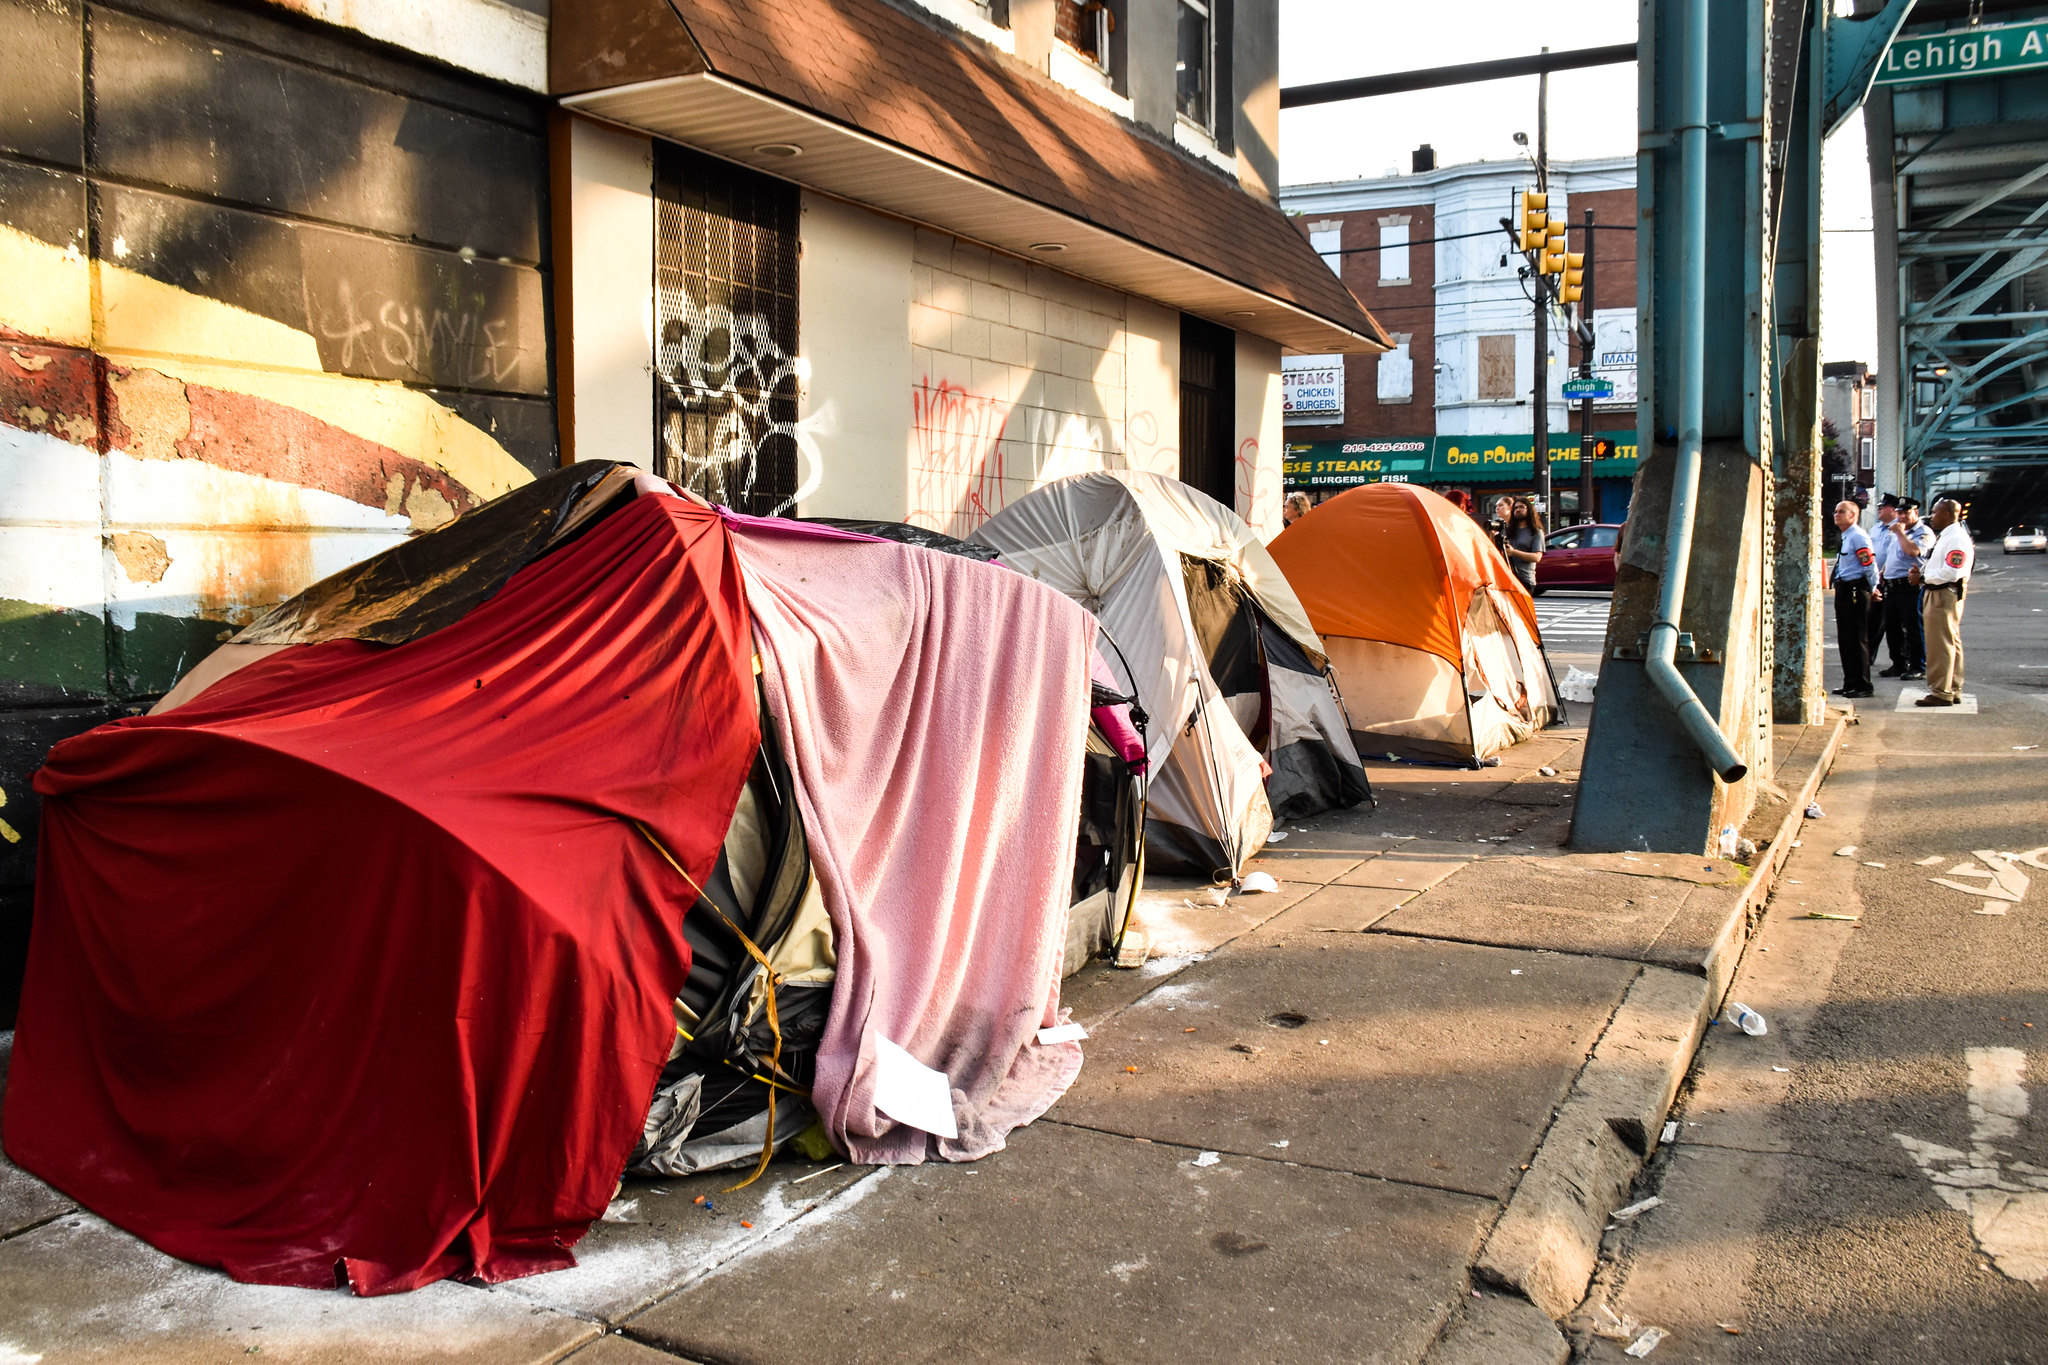 Several tents making up a homeless encampment on a Philadelphia sidewalk. 